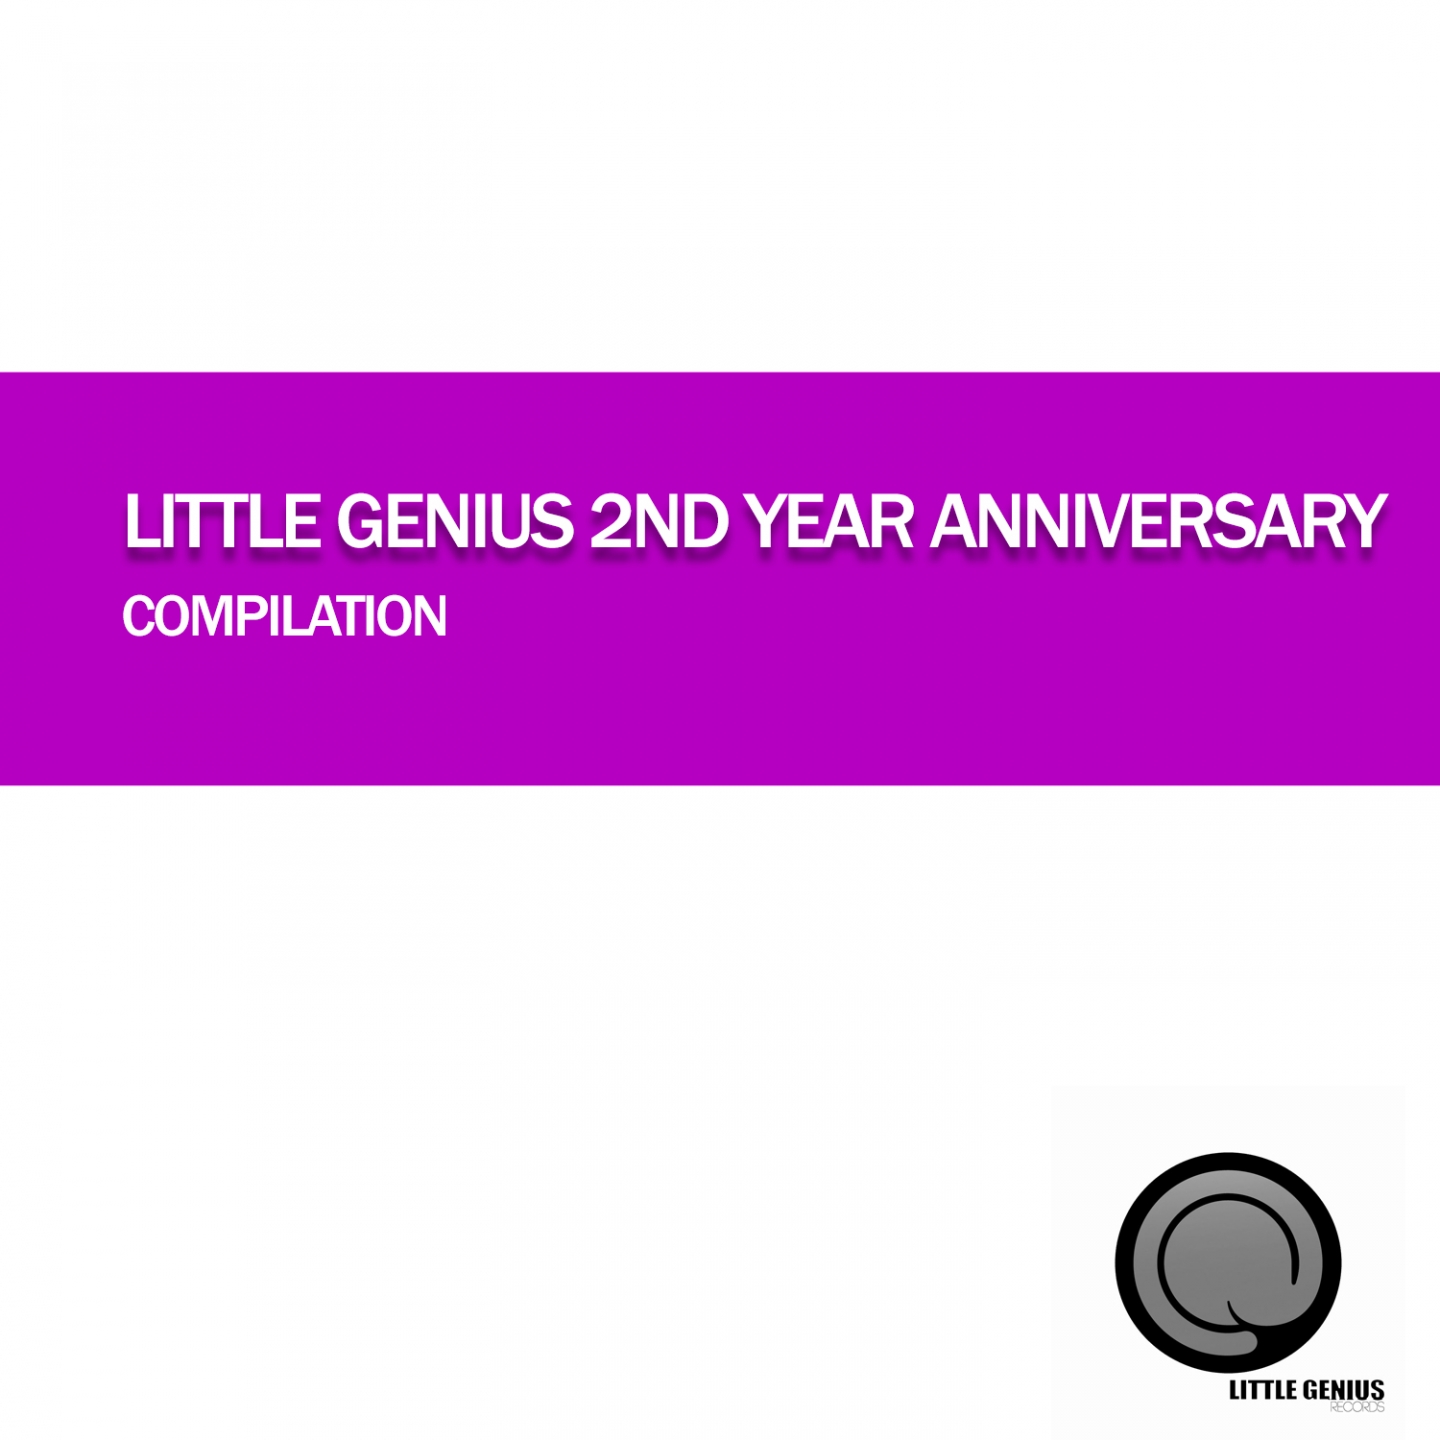 Little Genius 2nd Year Anniversary Compilation